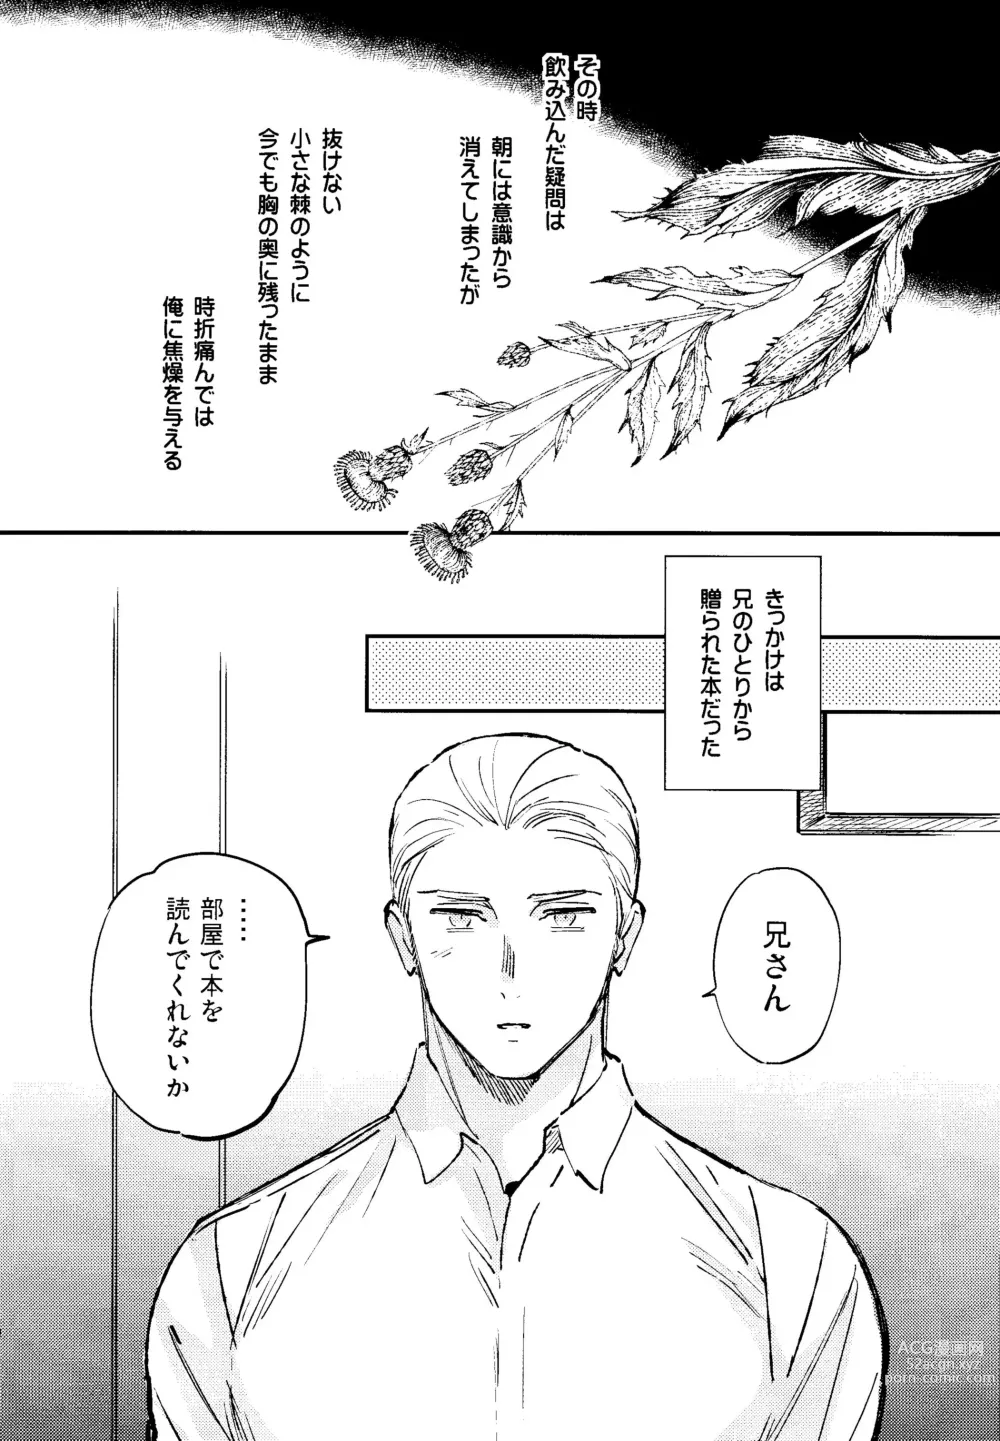 Page 8 of doujinshi Toge